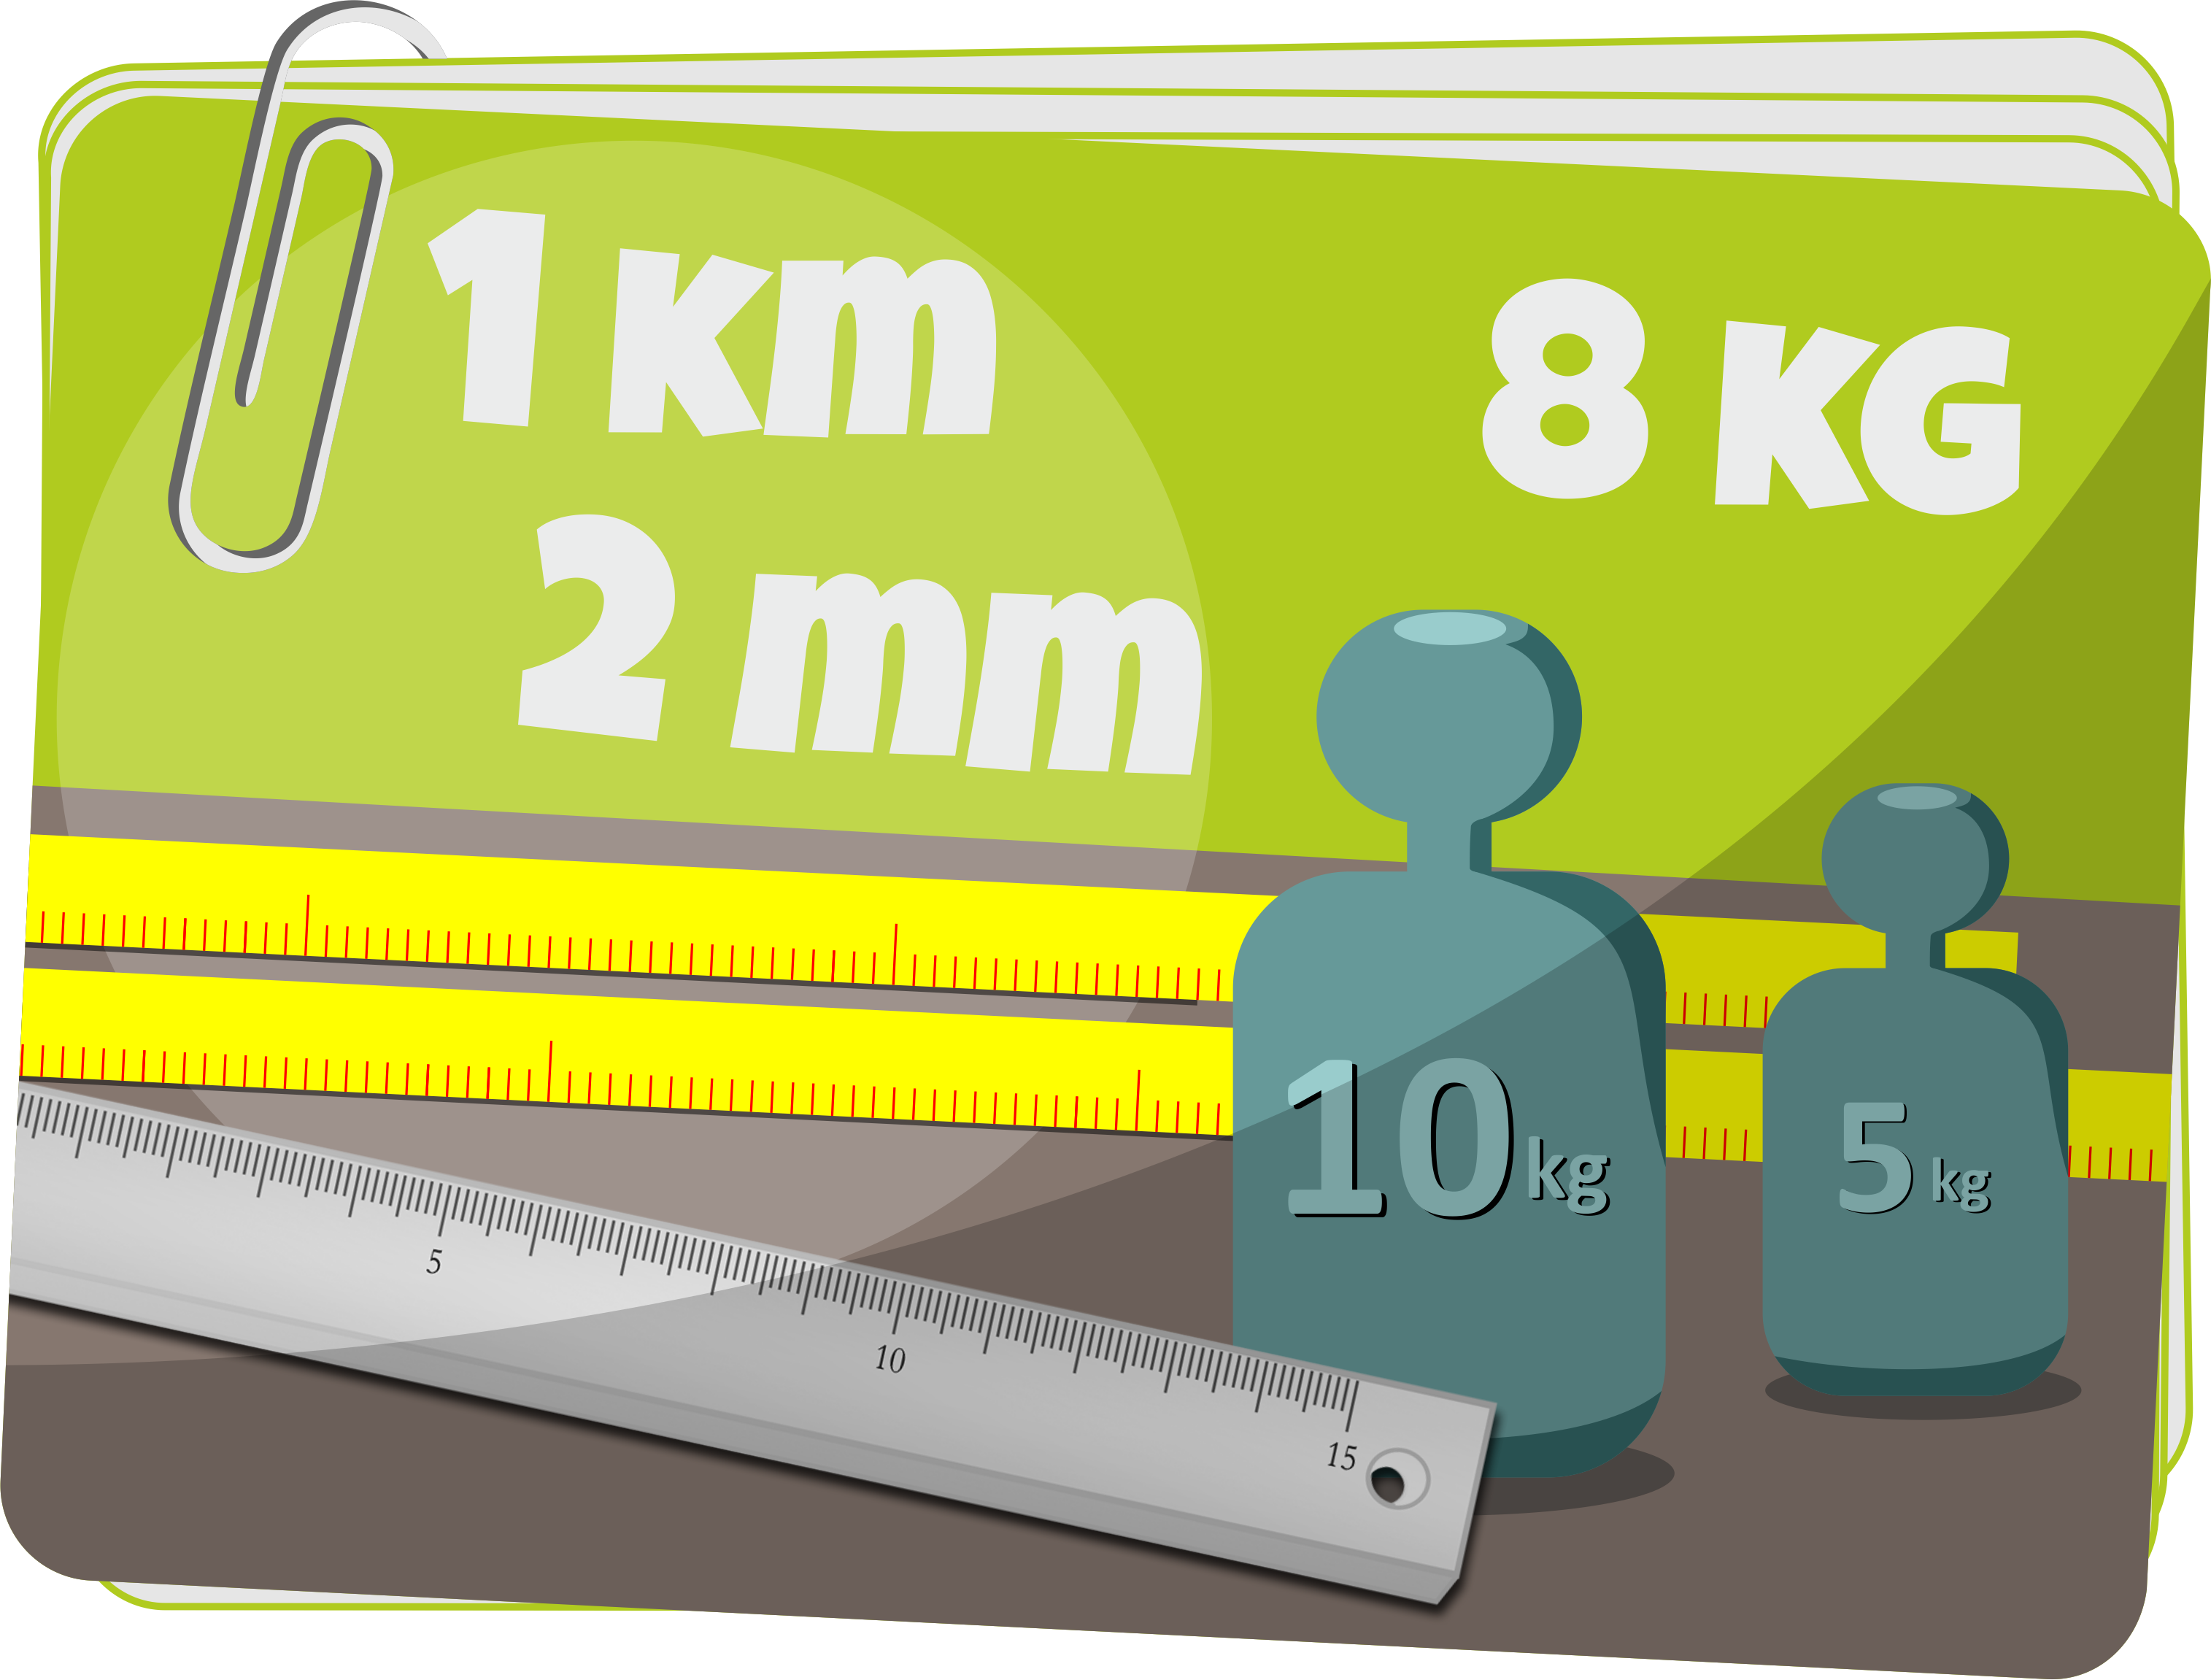 Miara i waga - Kilometry i kilogramy - Matematyka w praktyce - 4, 5 i 6 klasa